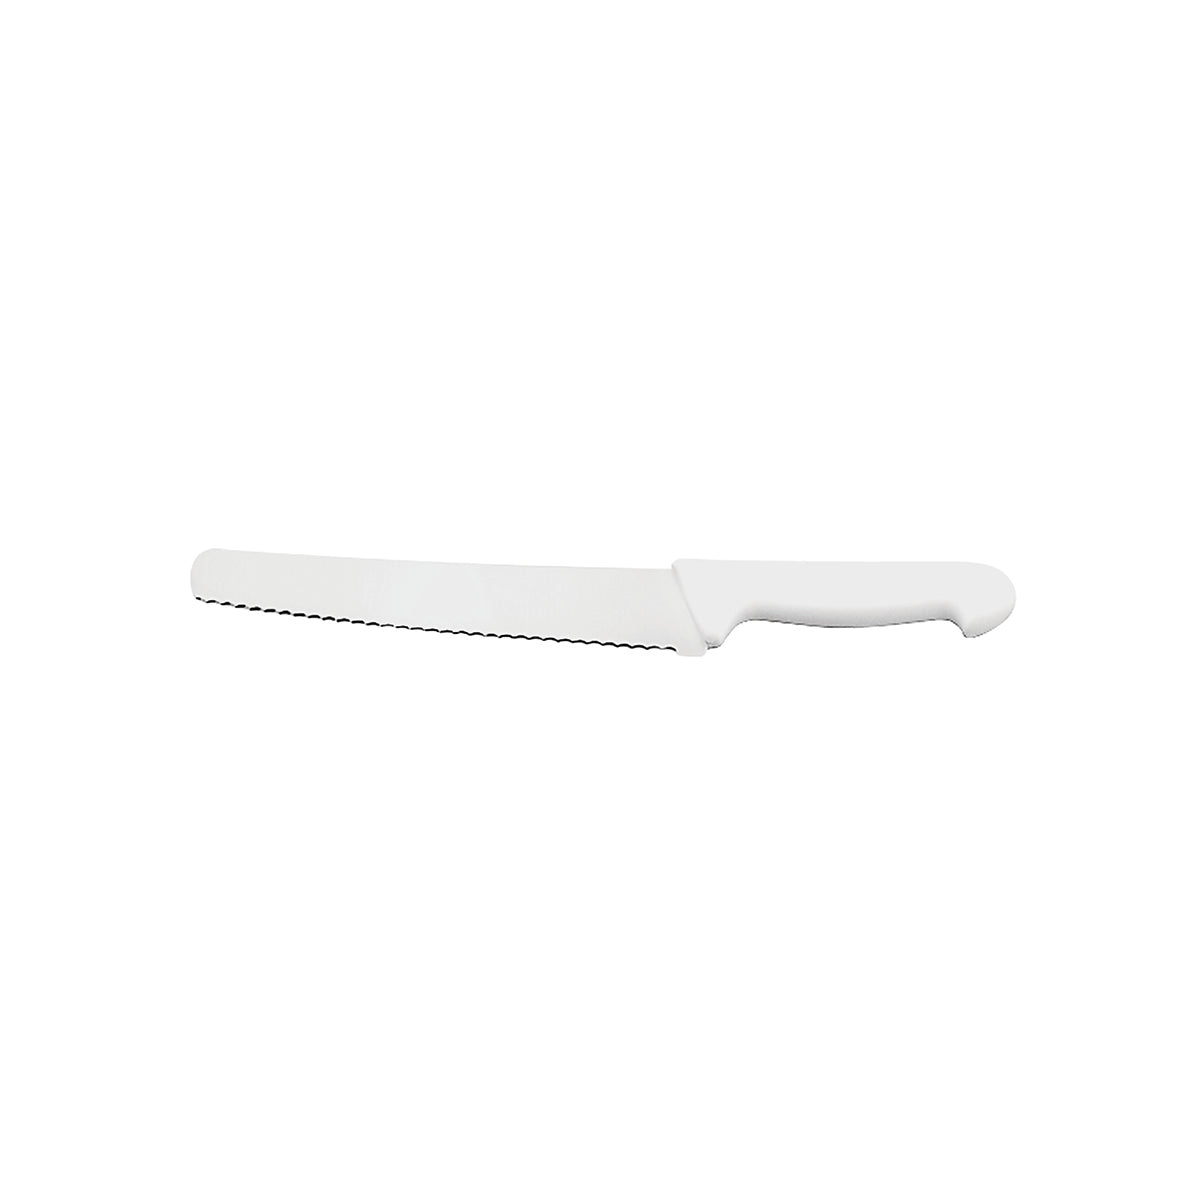 25481 Ivo Professional Line I Bread Knife White 250mm Tomkin Australia Hospitality Supplies